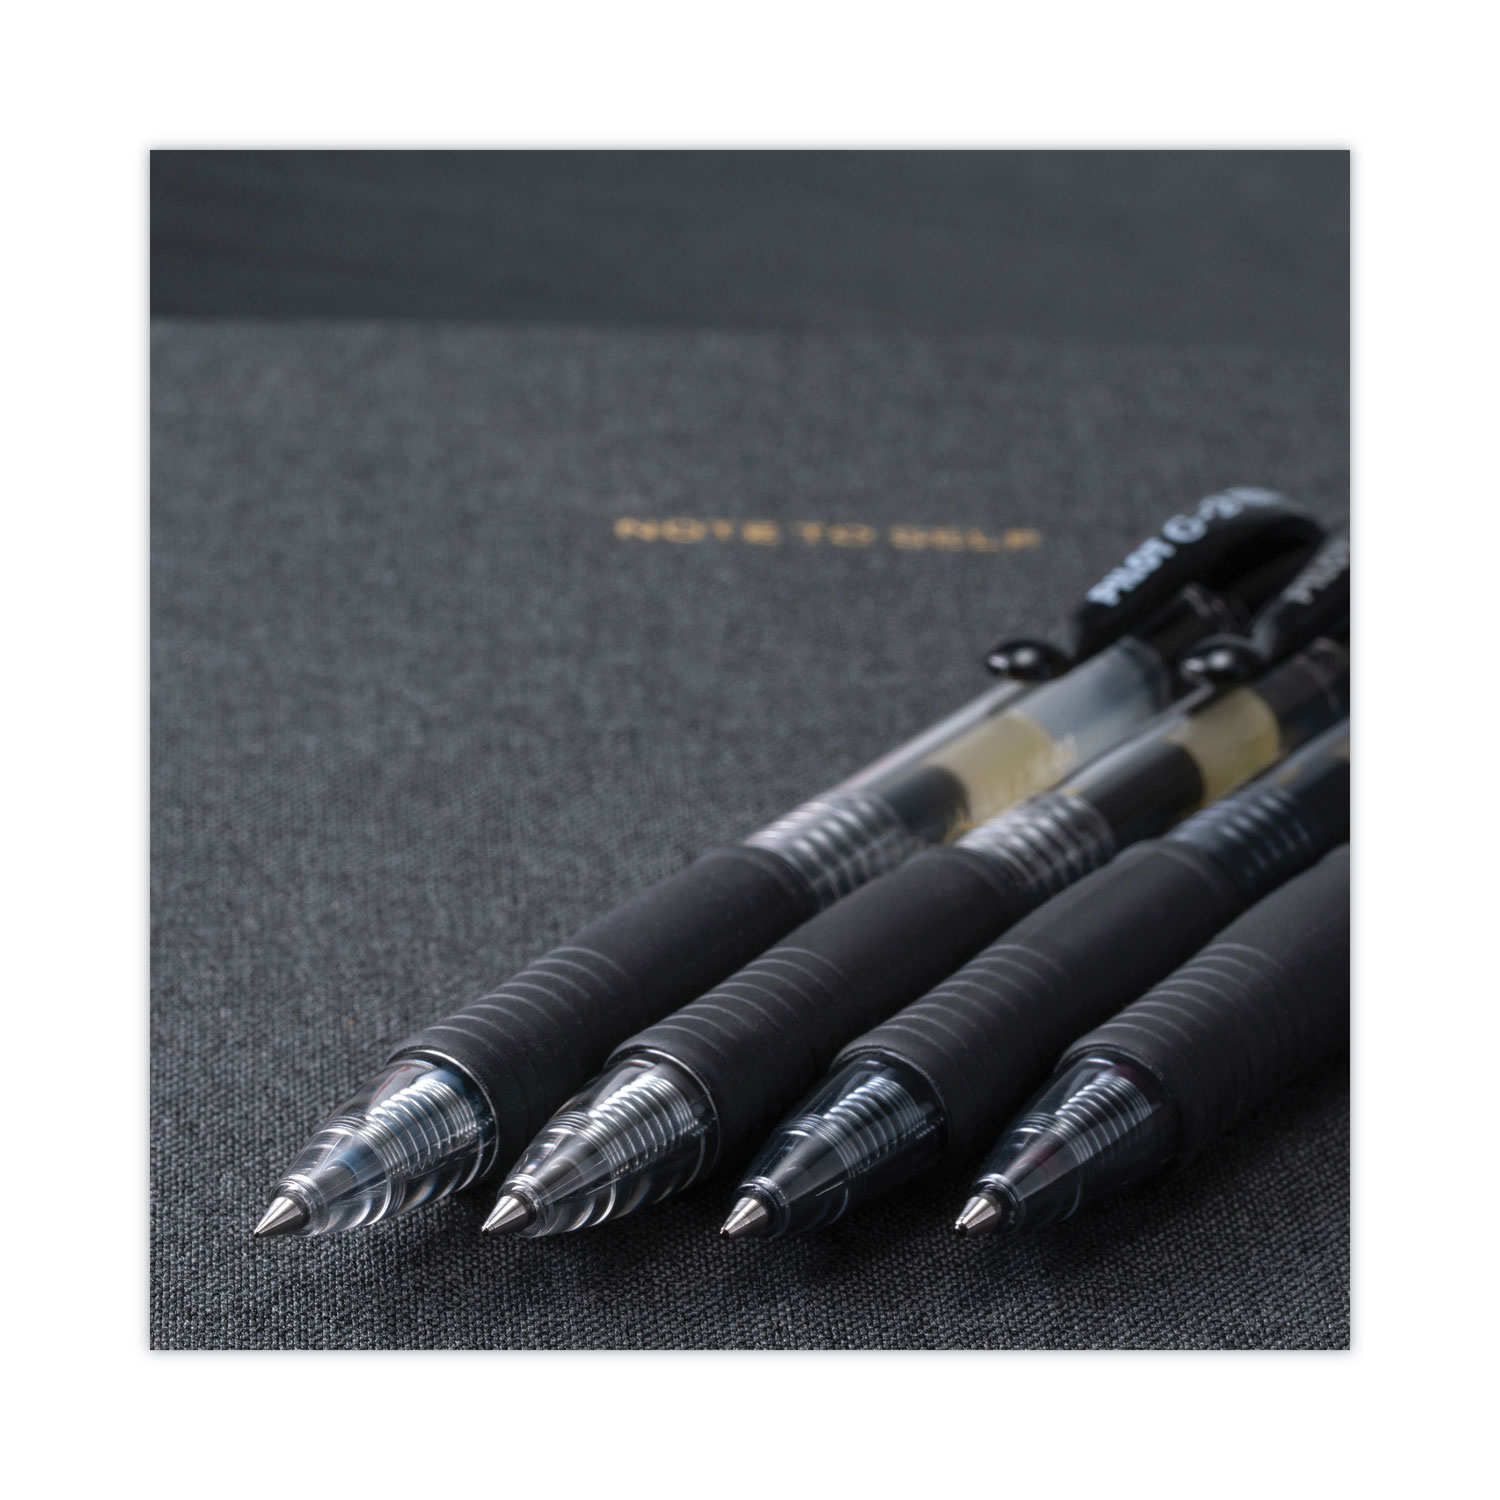 G2 Premium Gel Pen, Retractable, Extra-Fine 0.5 mm, Black Ink